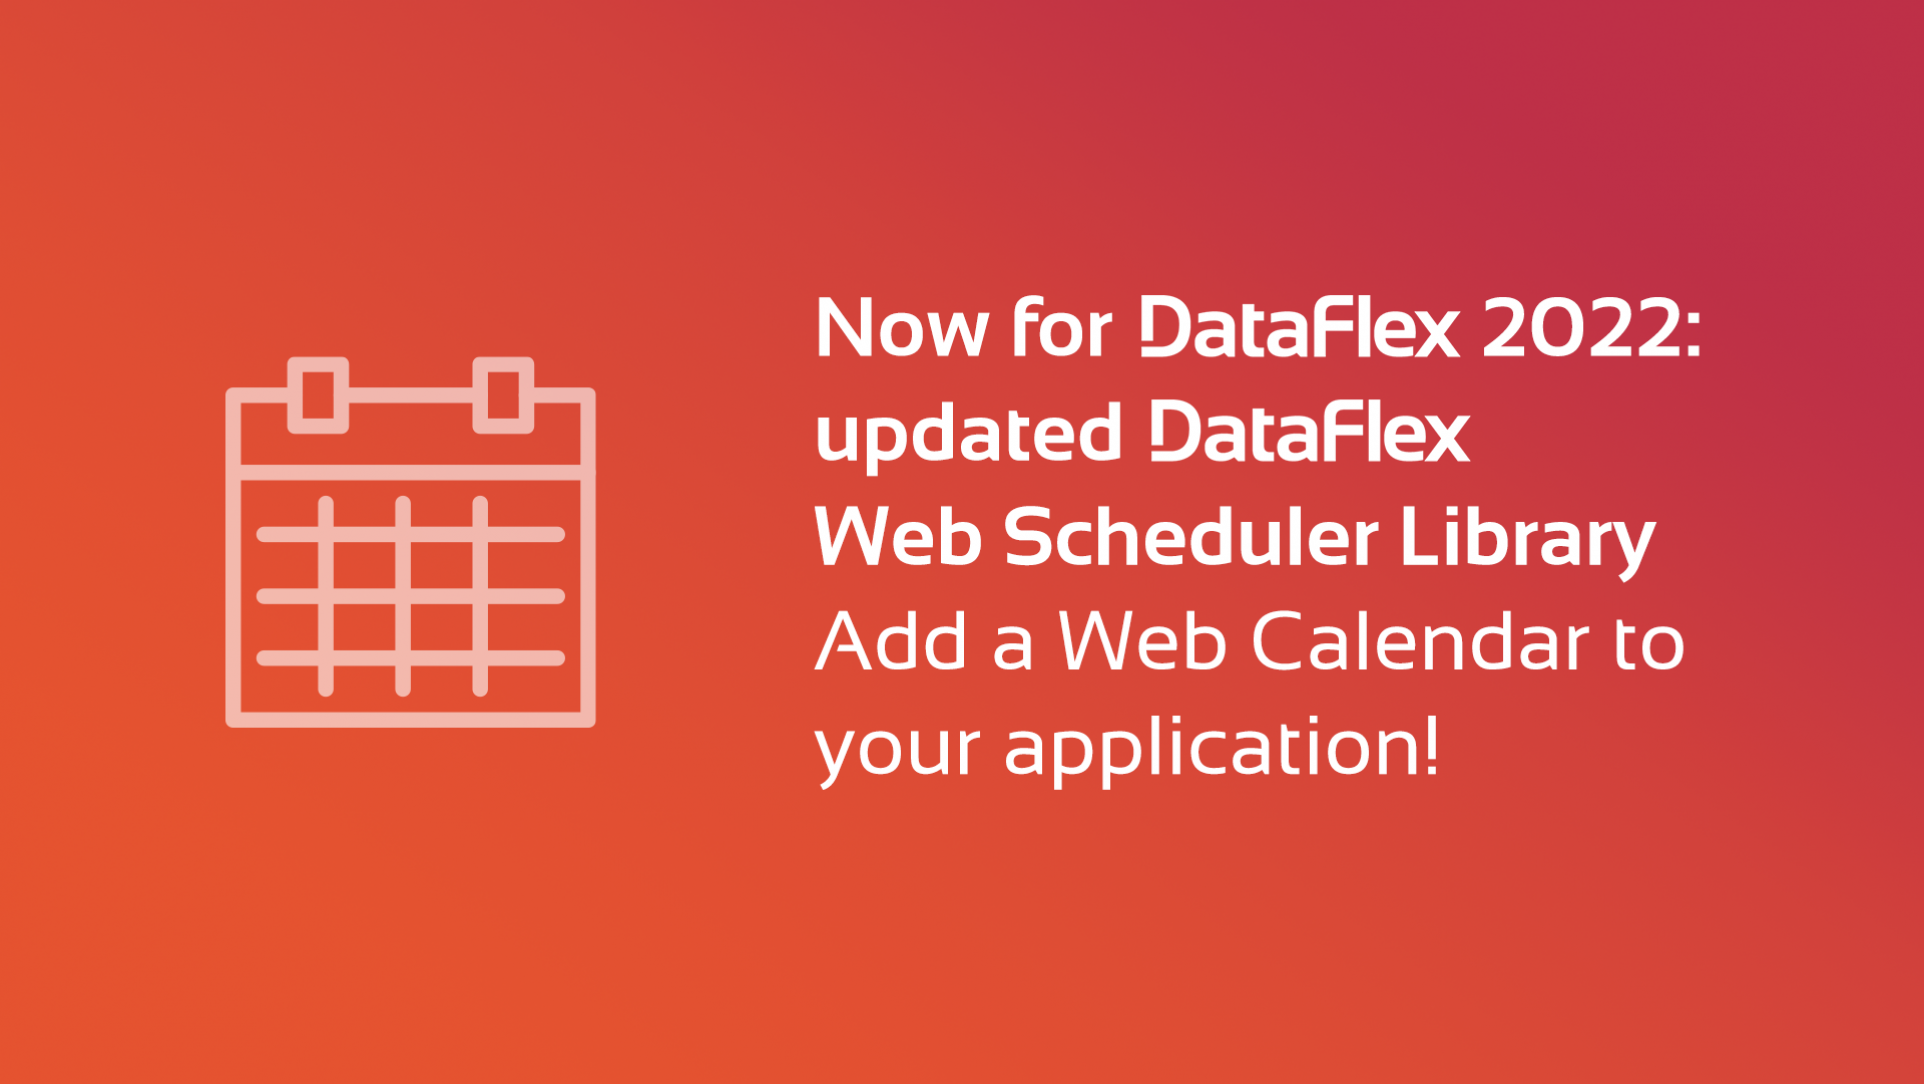 Web Scheduler Library for DataFlex